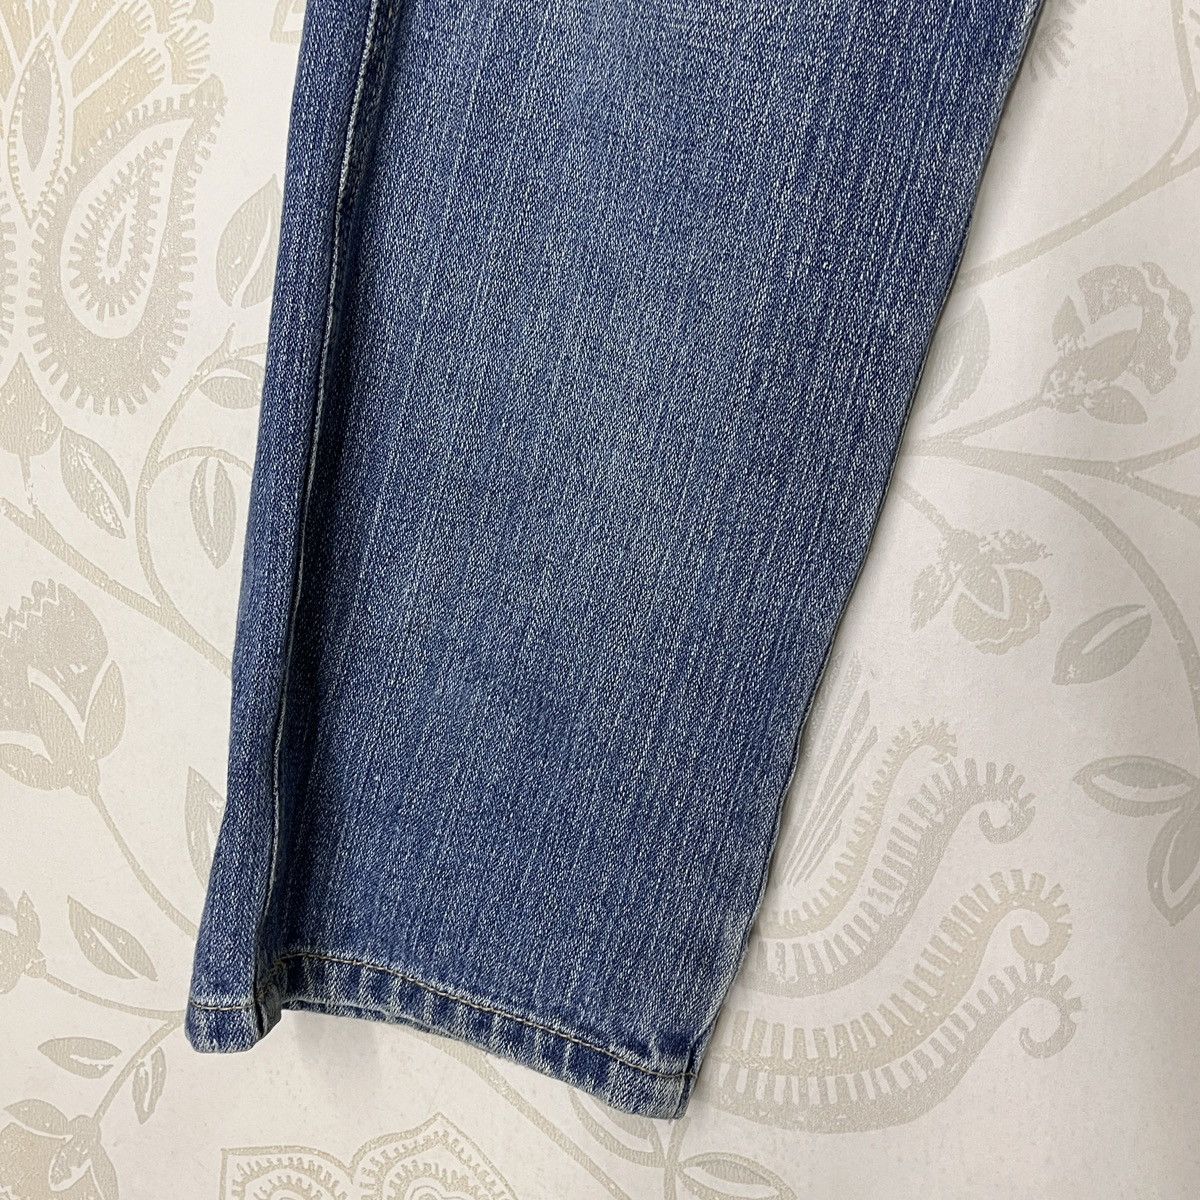 Ripped Three Stones Throw Denim Jeans Avant Garde Pockets - 15